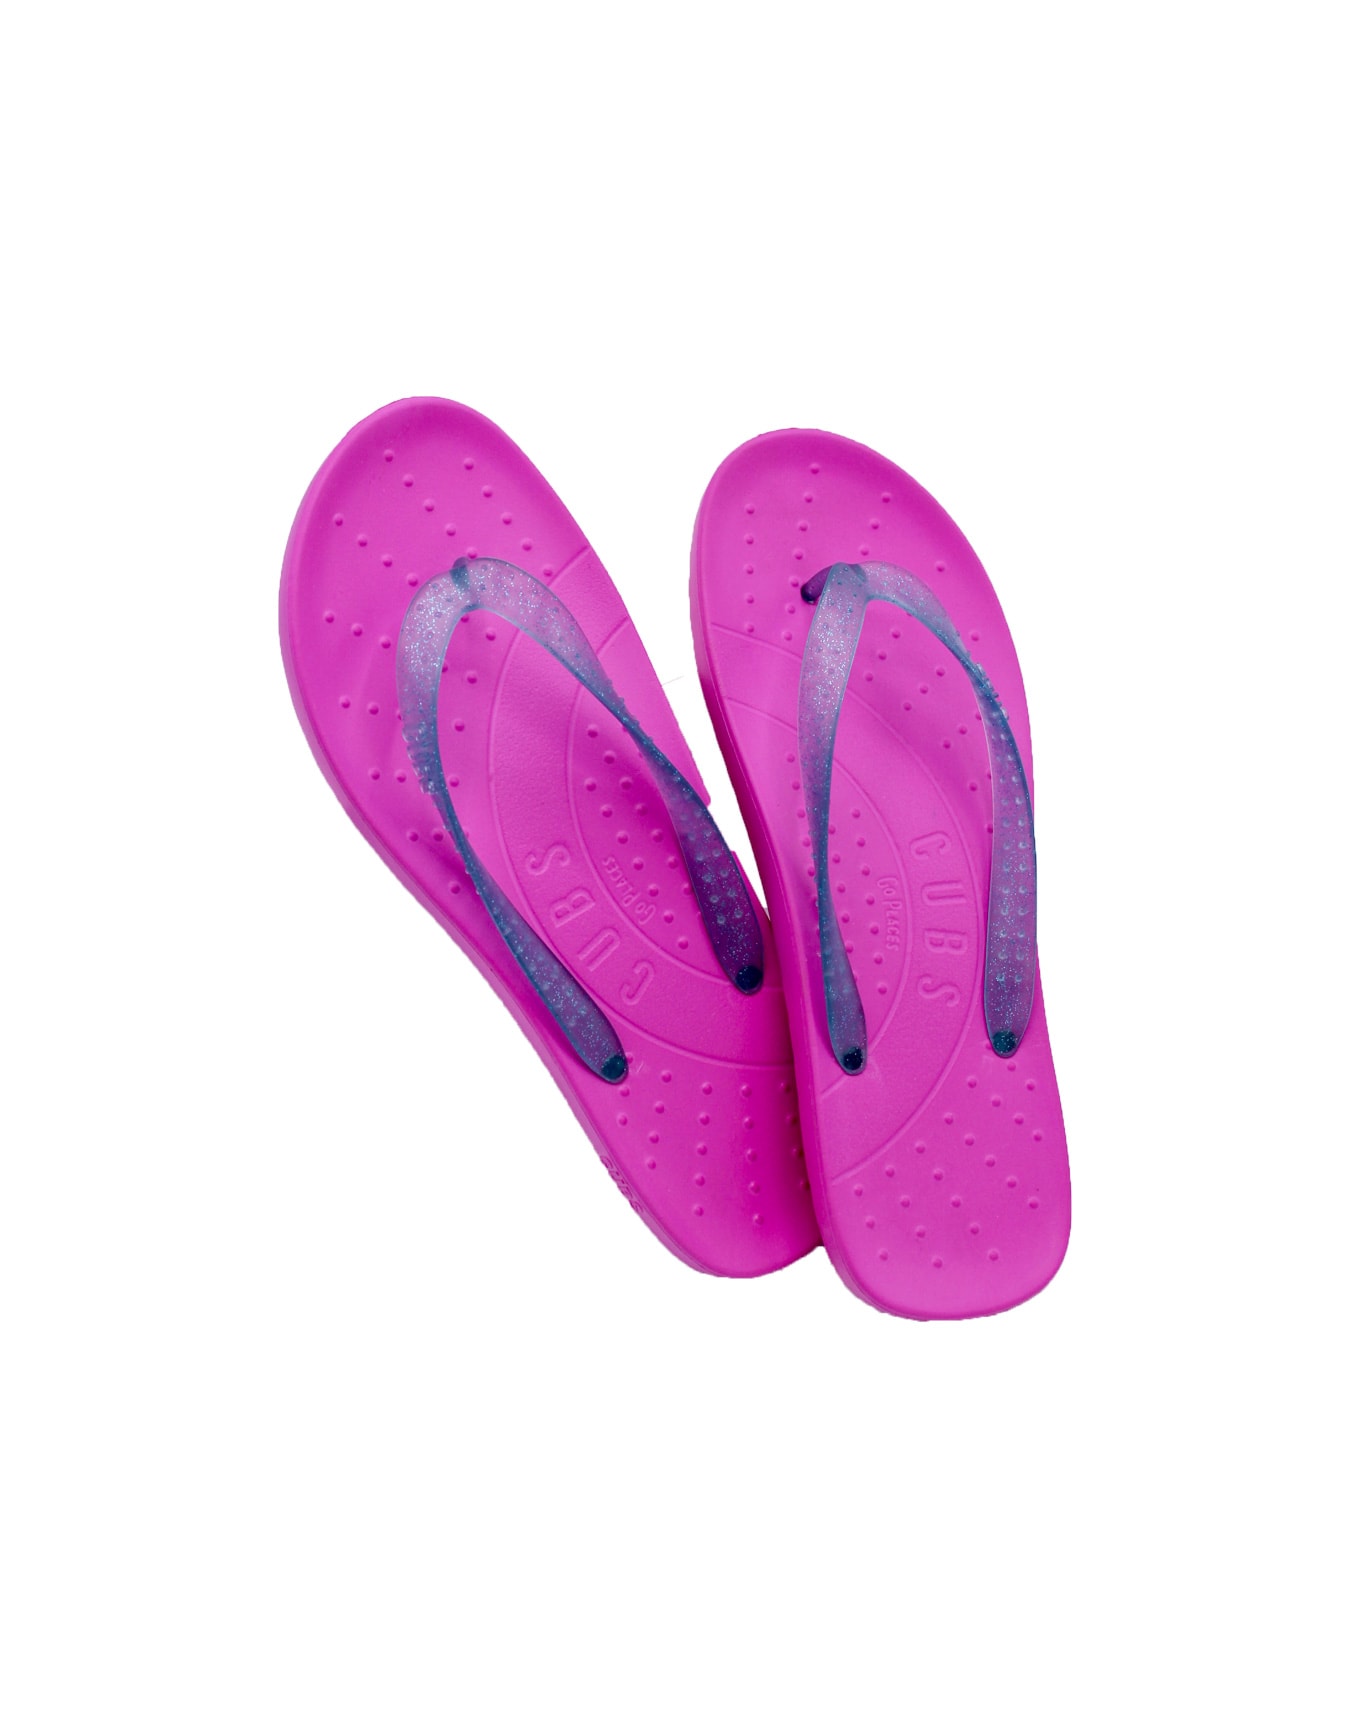 Bali Flip Flop Pink with Glitter Strap 